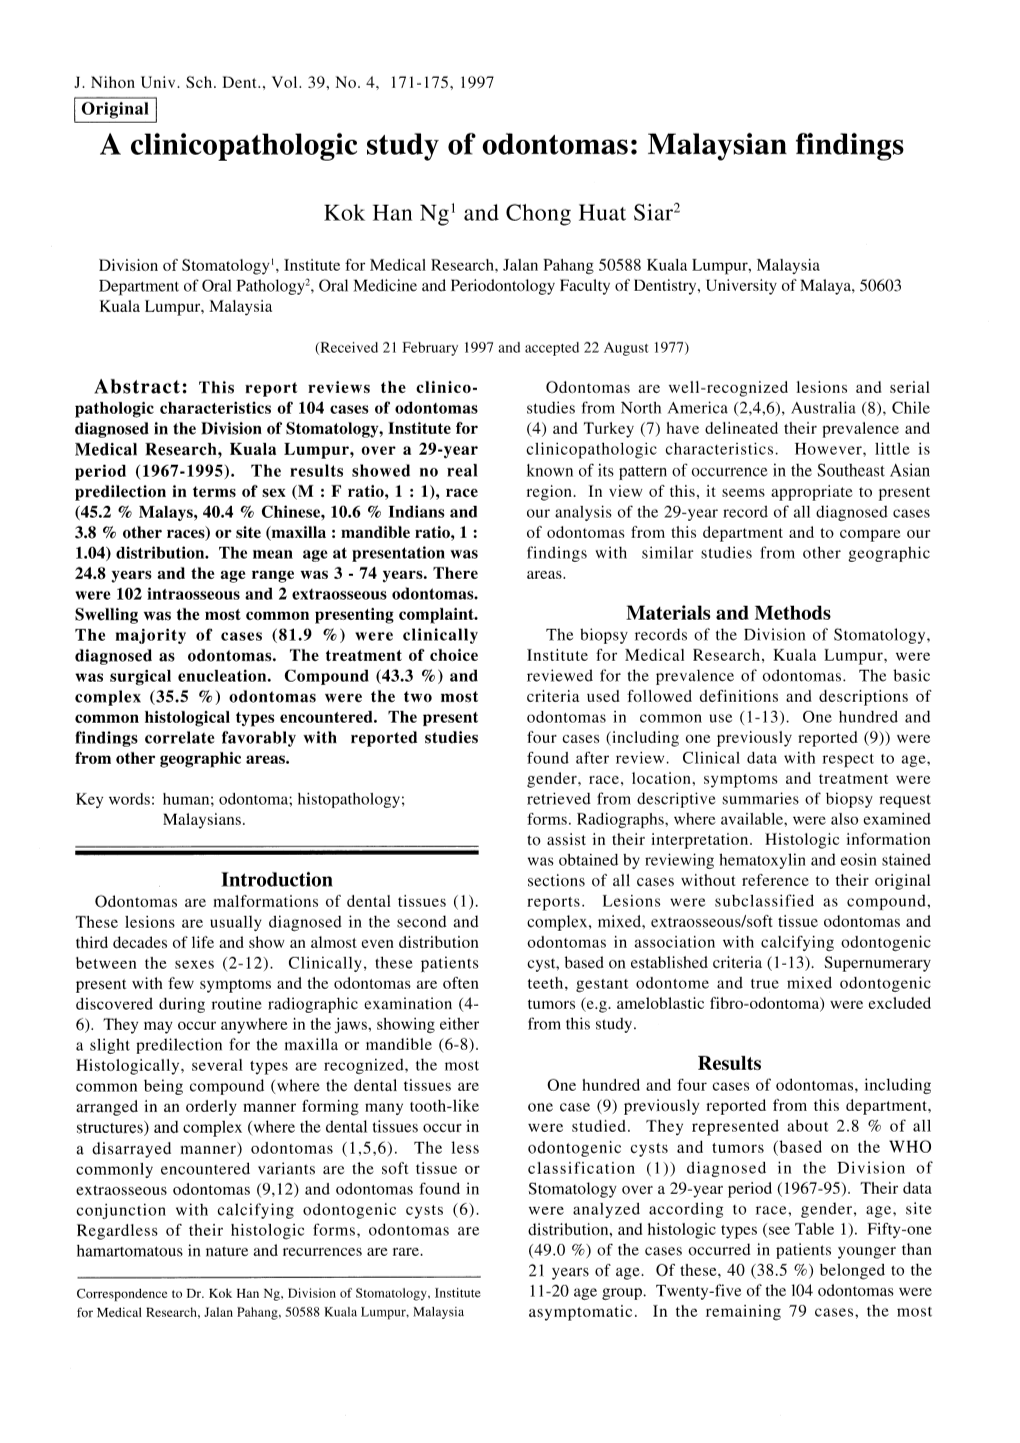 A Clinicopathologic Study of Odontomas: Malaysian Findings